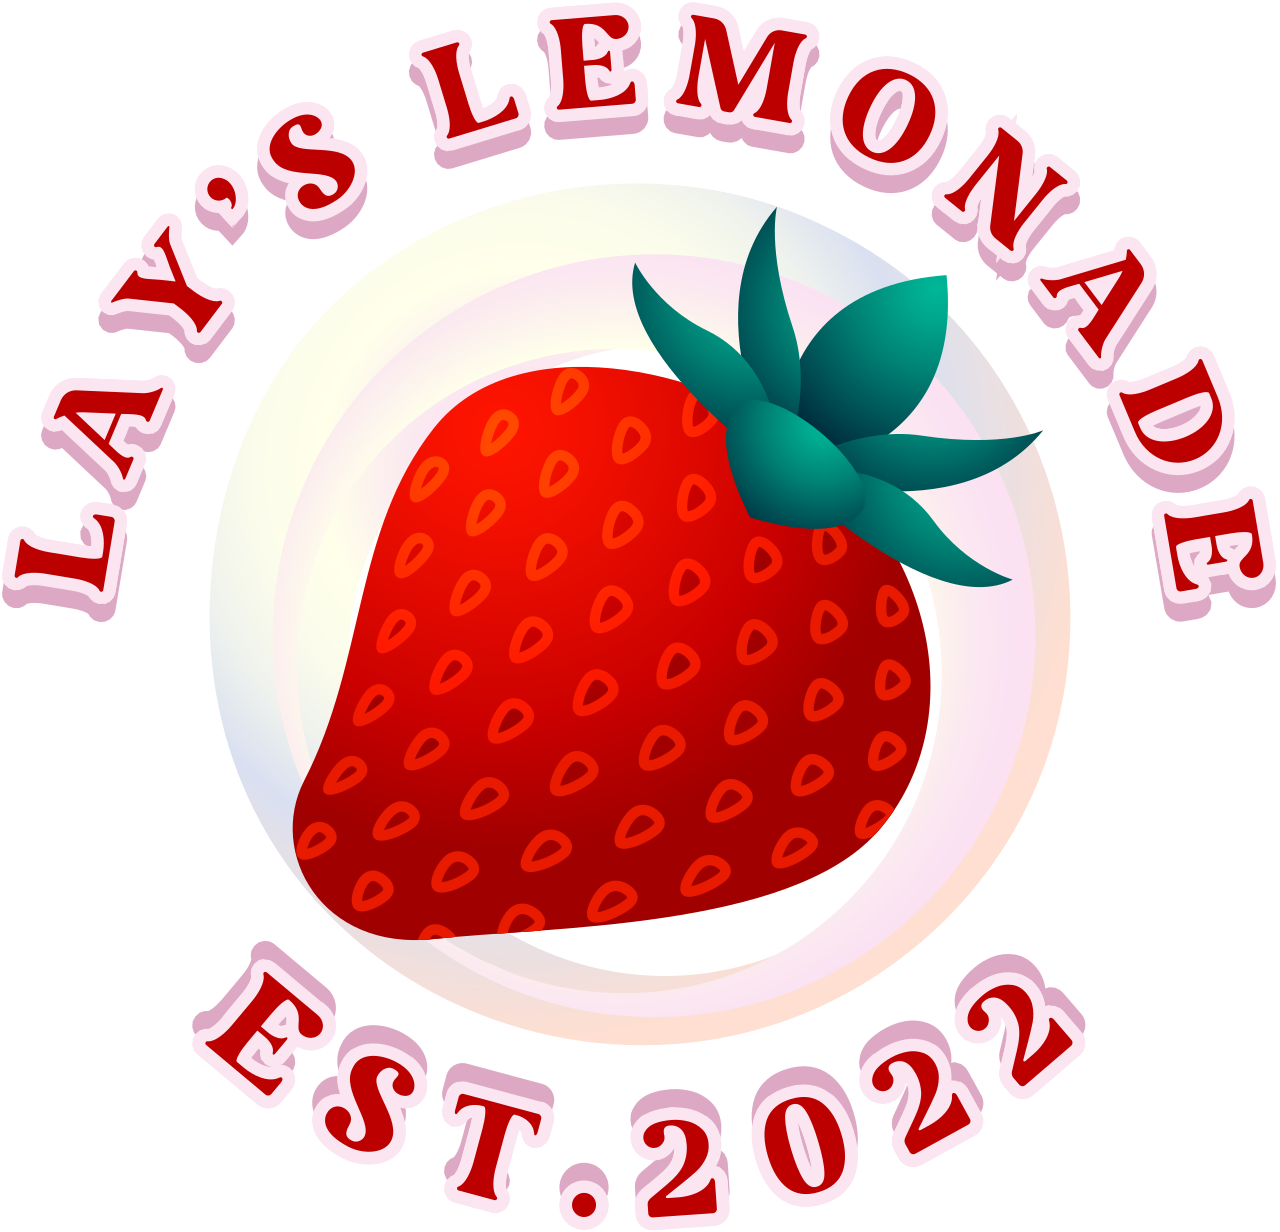 LAY’S LEMONADE's logo